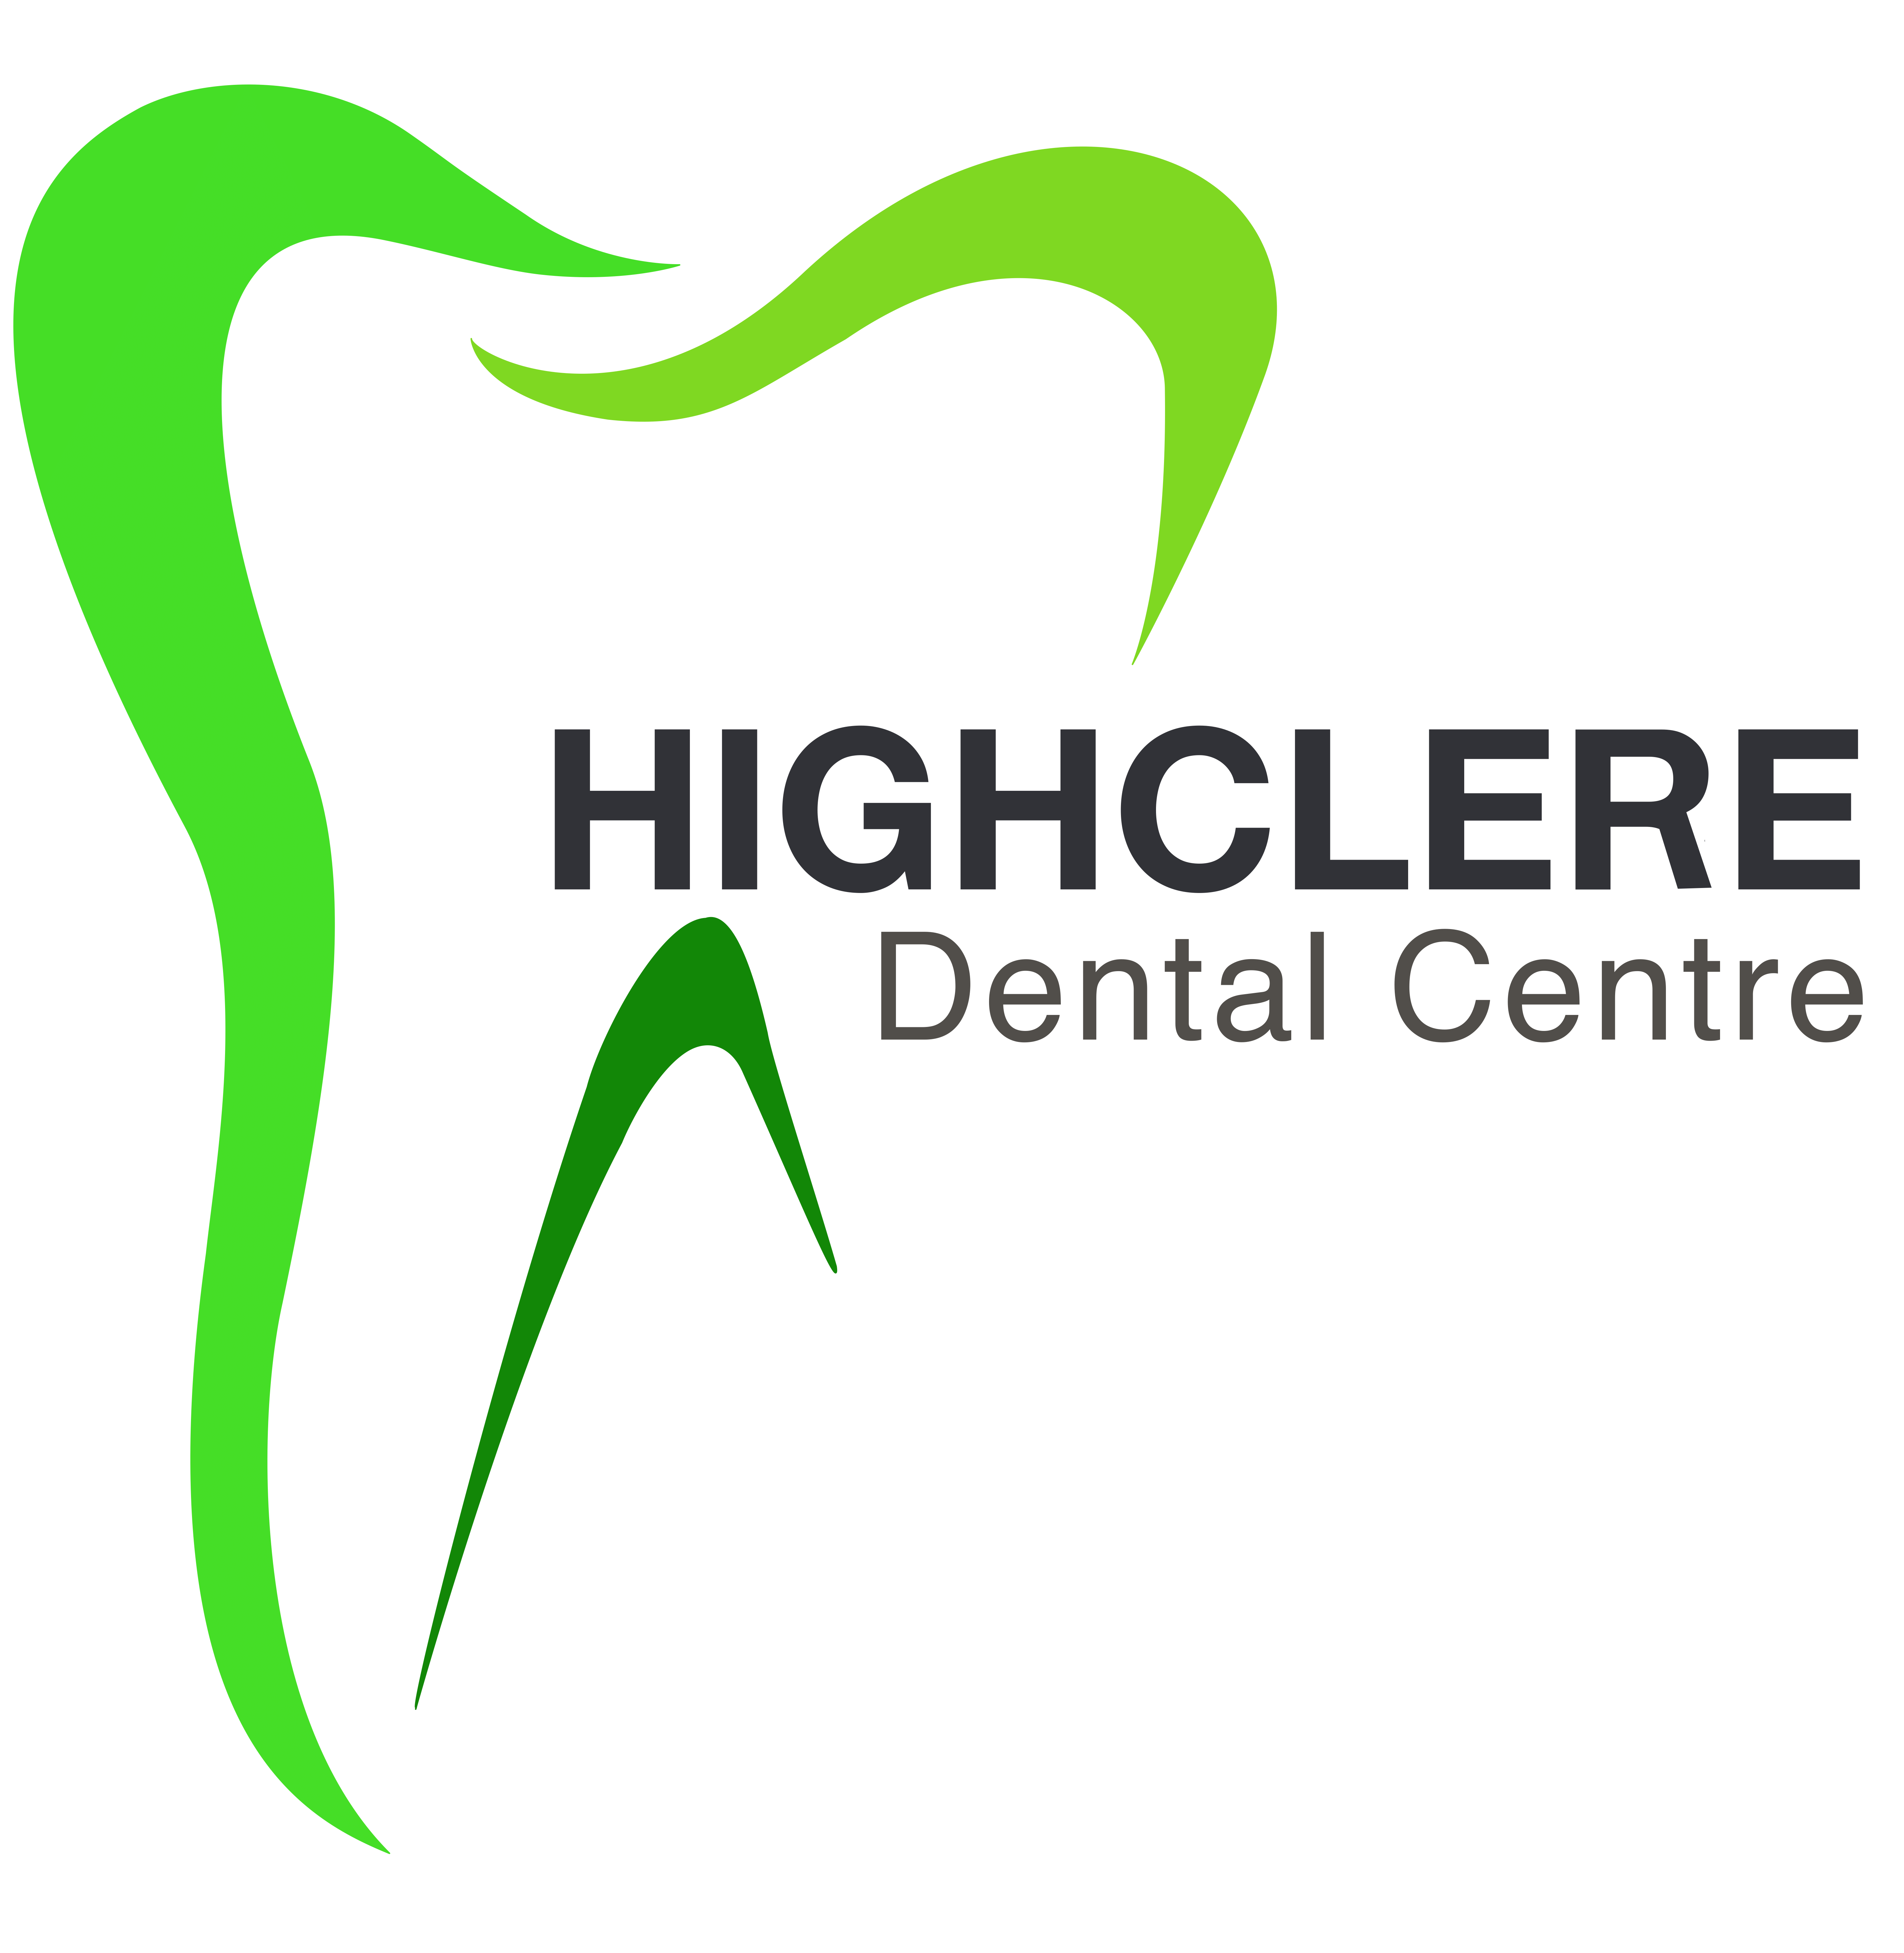 Highclere Dental Centre